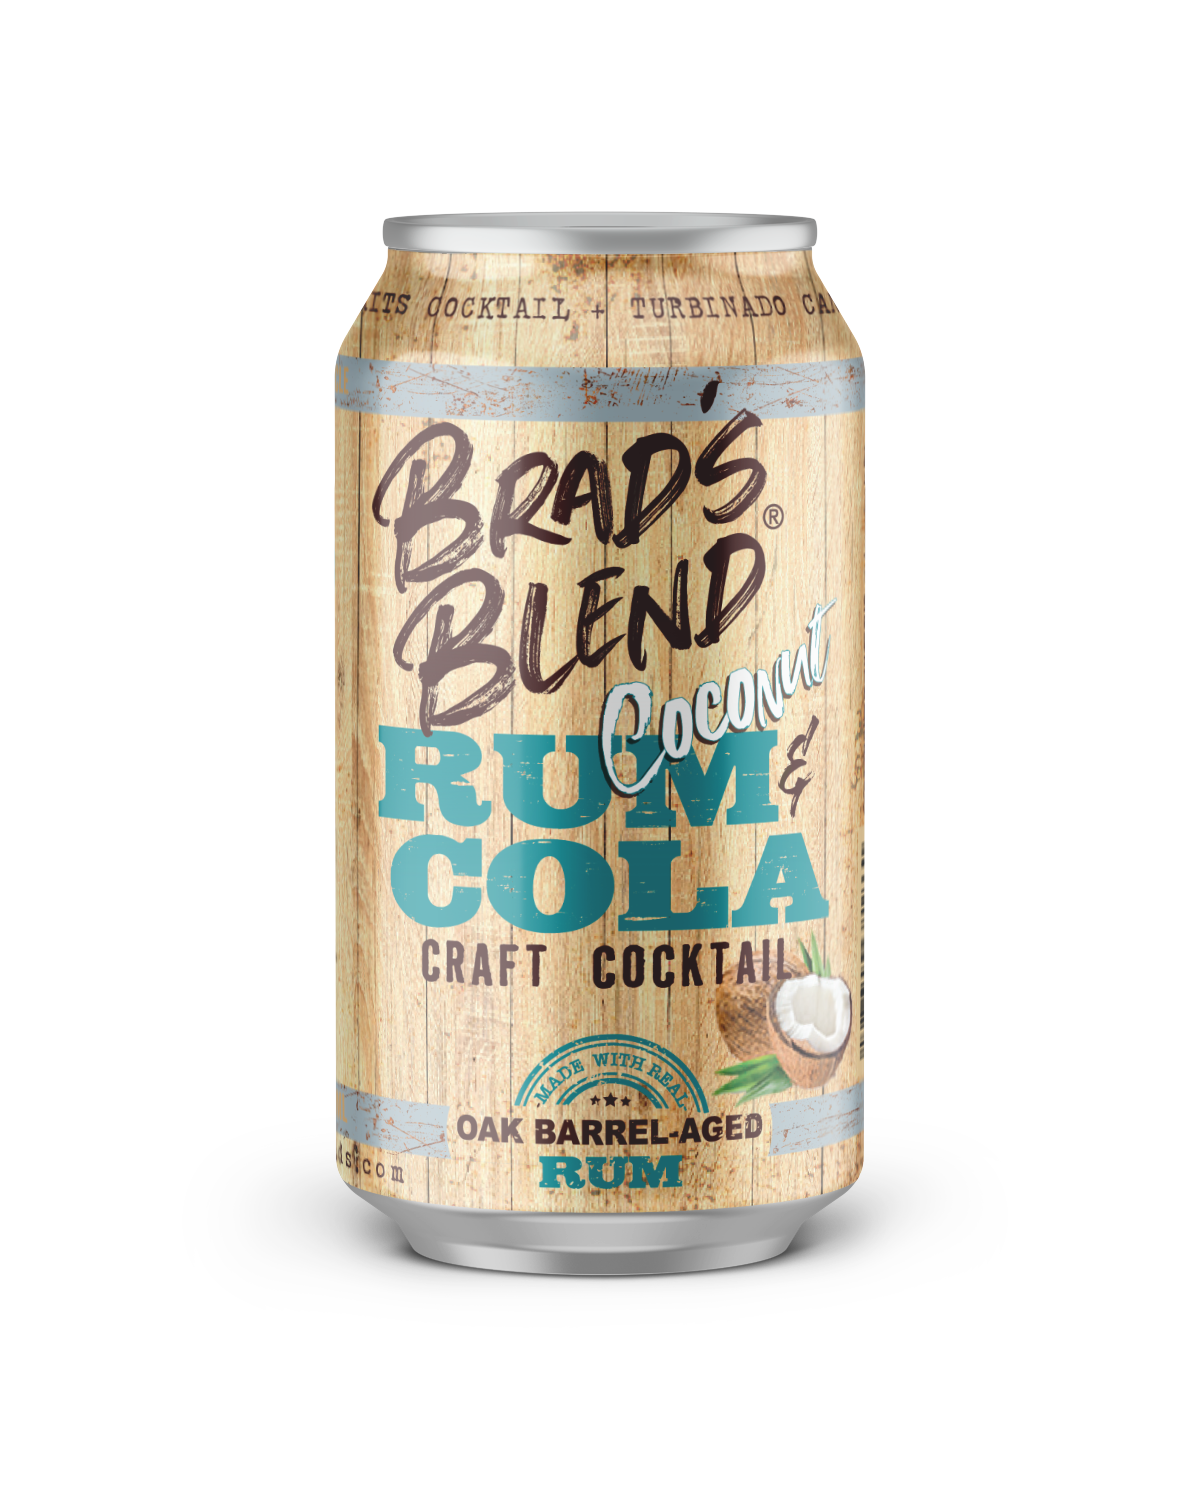 Brad's Coconut Blend of Rum & Cola